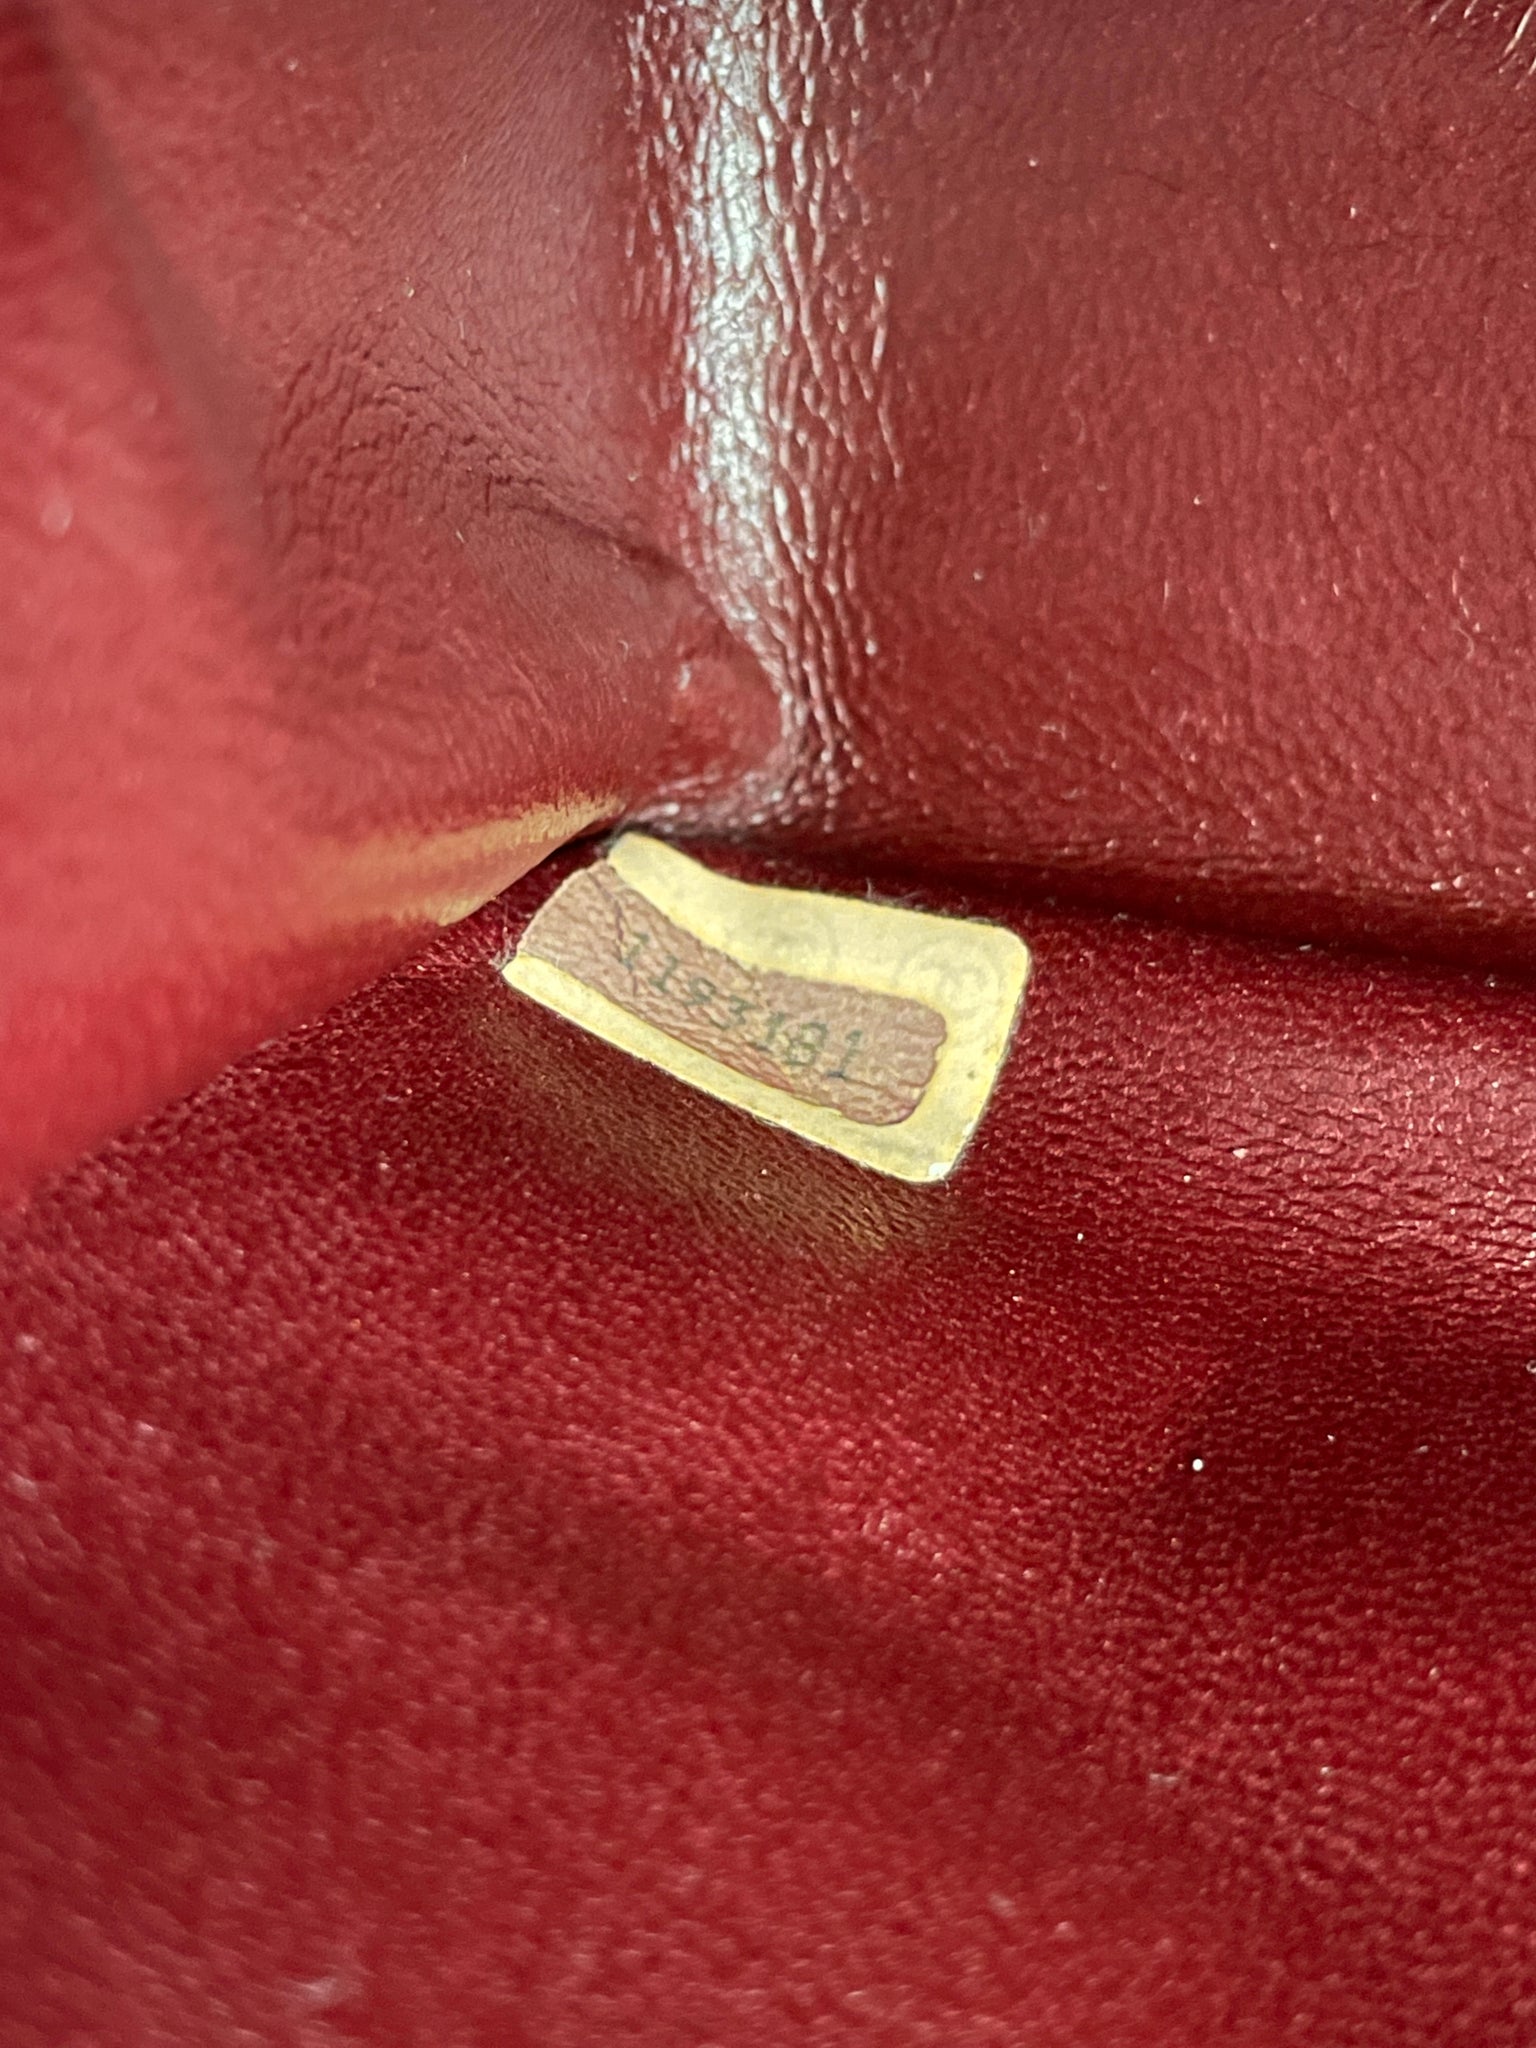 Chanel Small Lambskin Bag & Matching Wallet